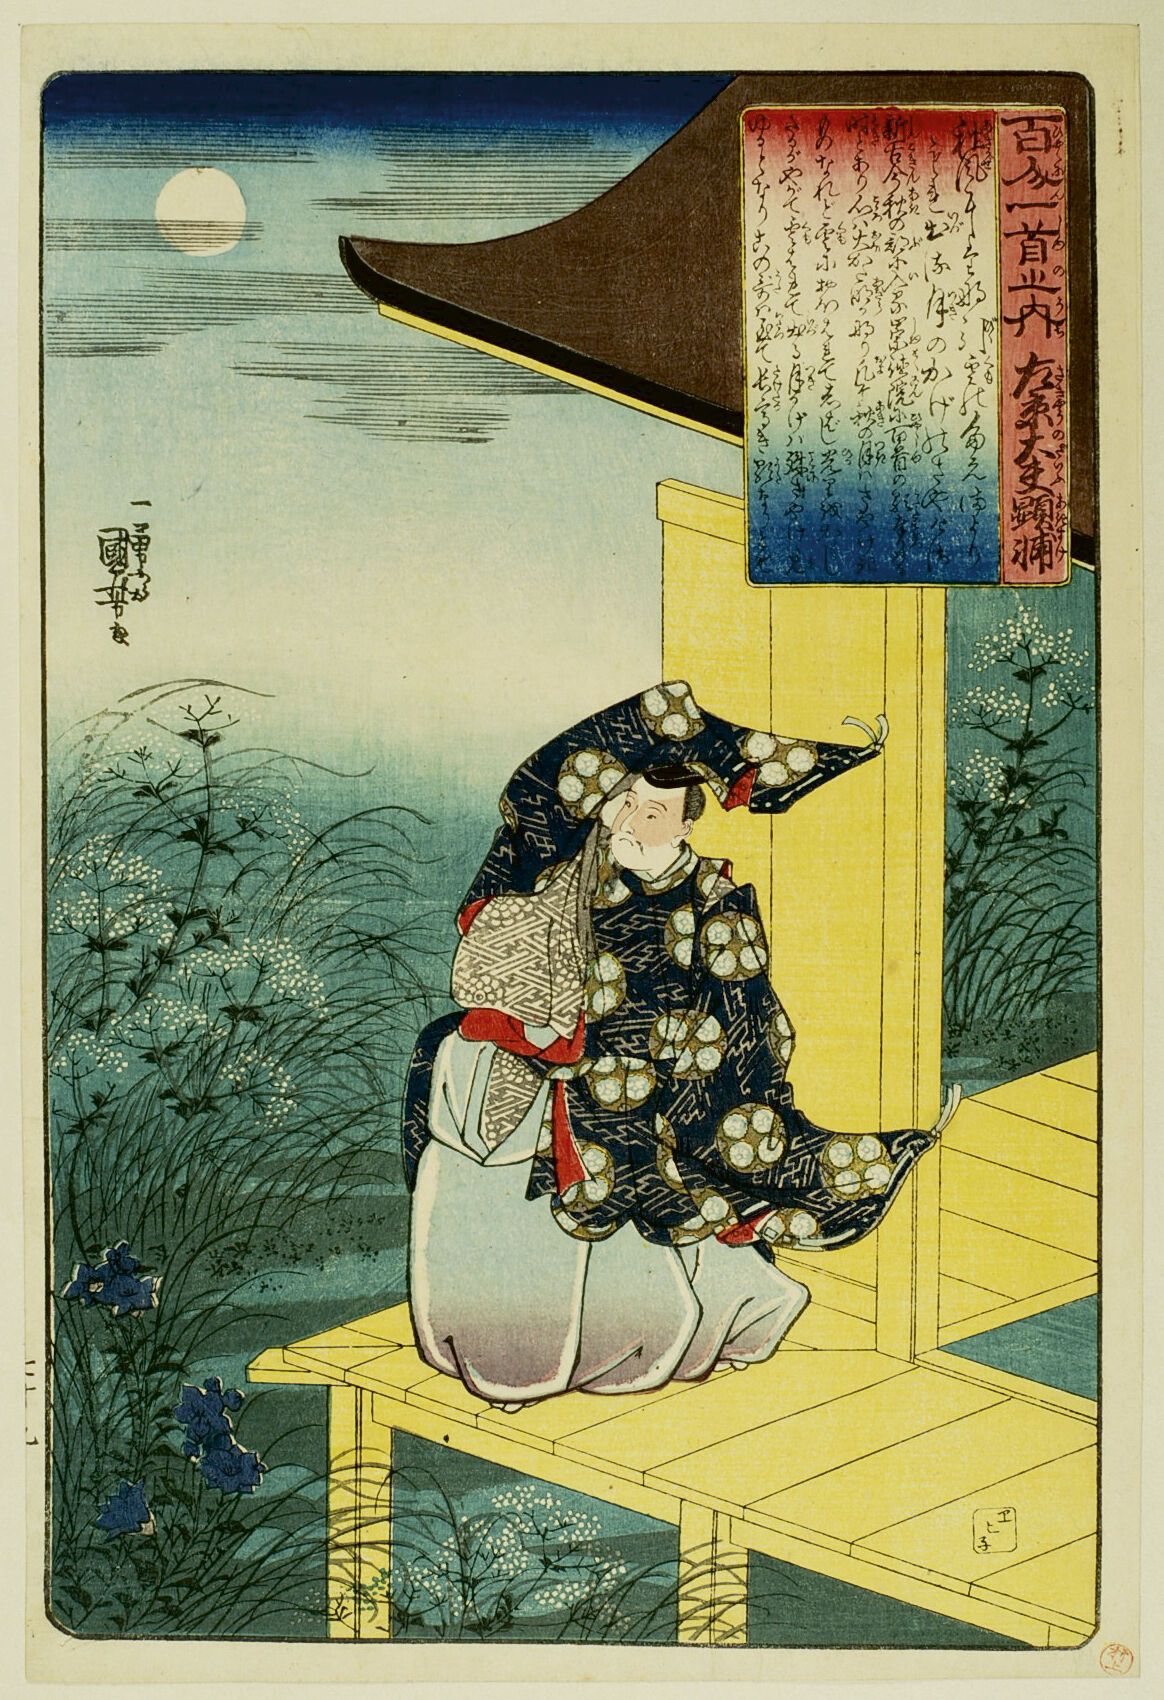 Null 宇都宫邦彦 (1797-1861)
百人一首》系列中的 "Oban tate-e"，板书 "Sakyô-no-dayû Akisuke"，诗人在他的阳&hellip;